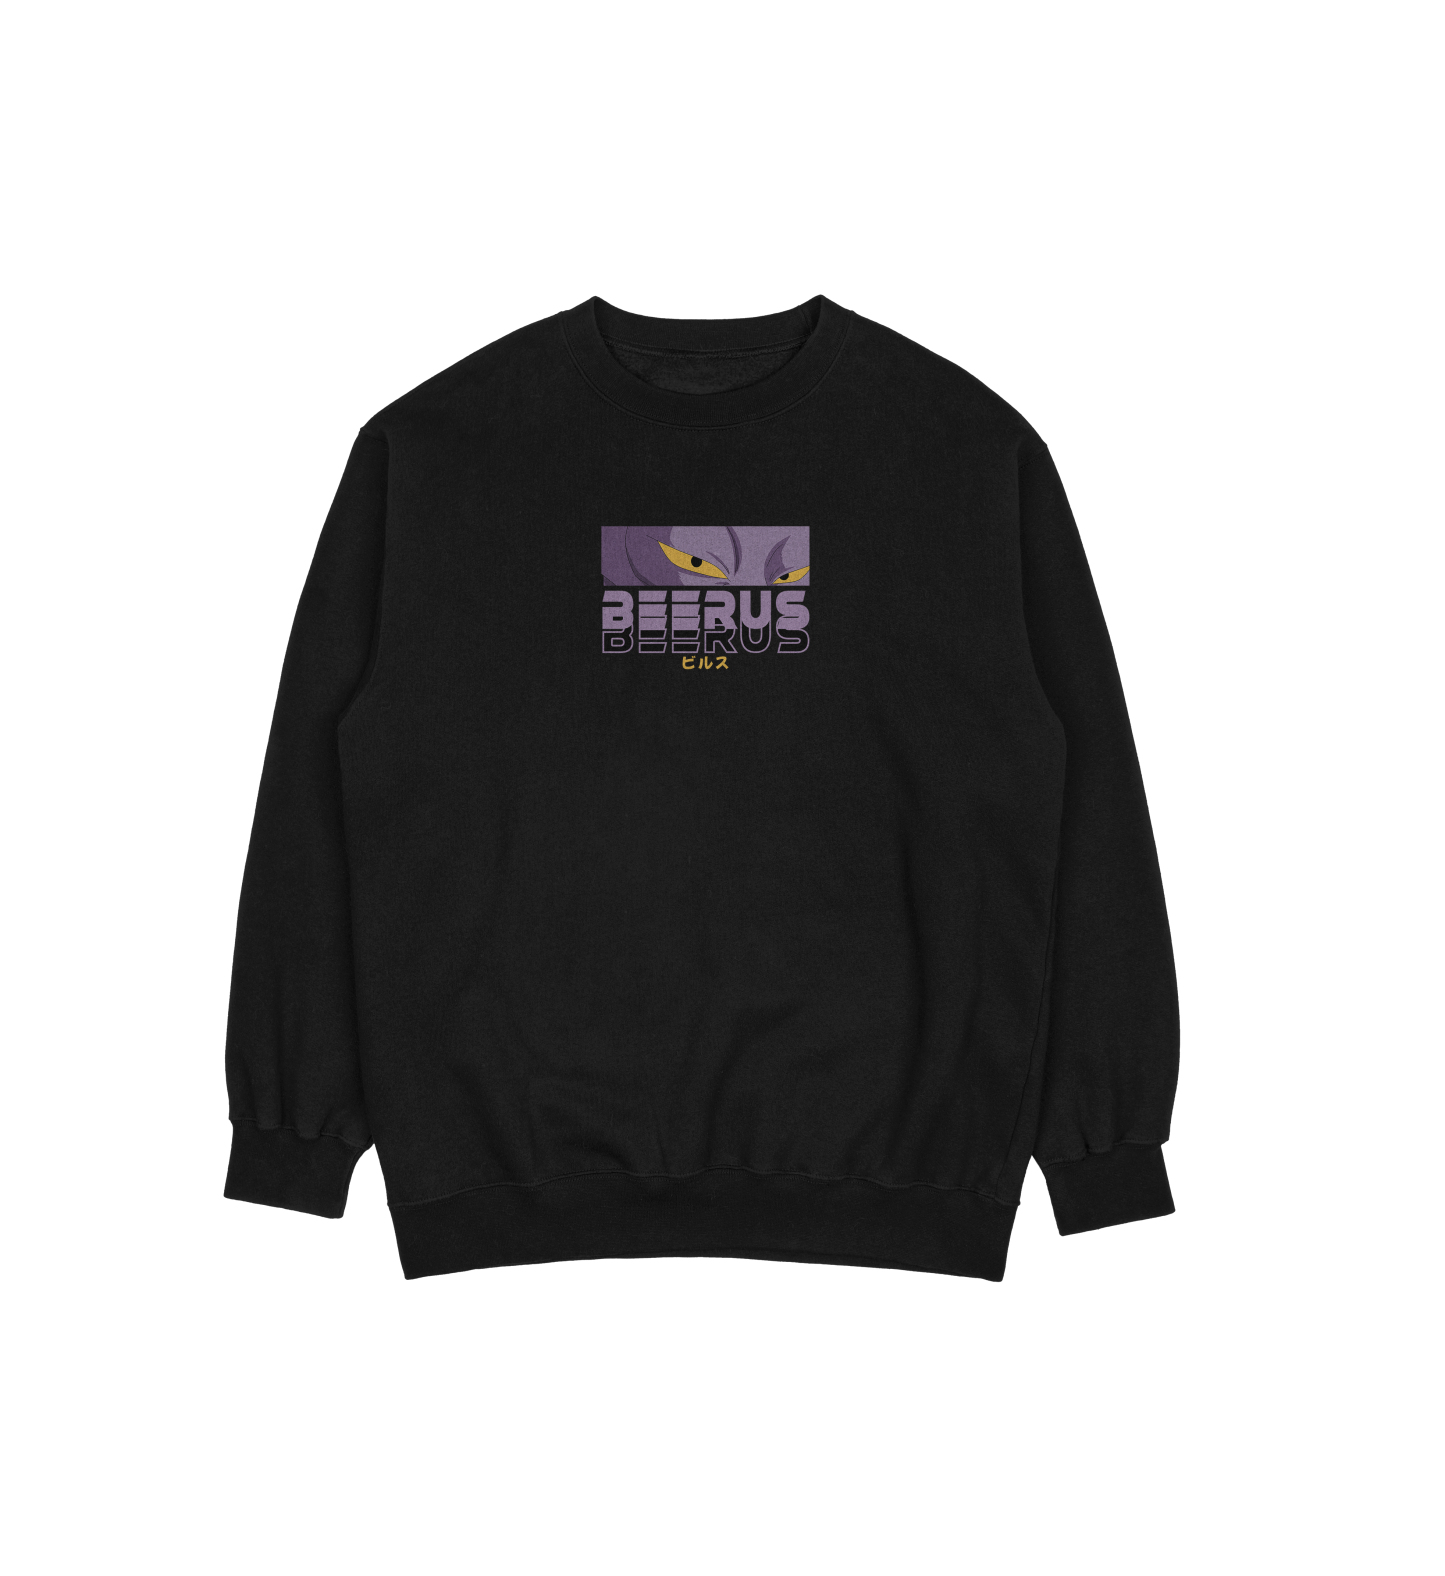 Beerus Dragon Ball Super | Sweatshirt